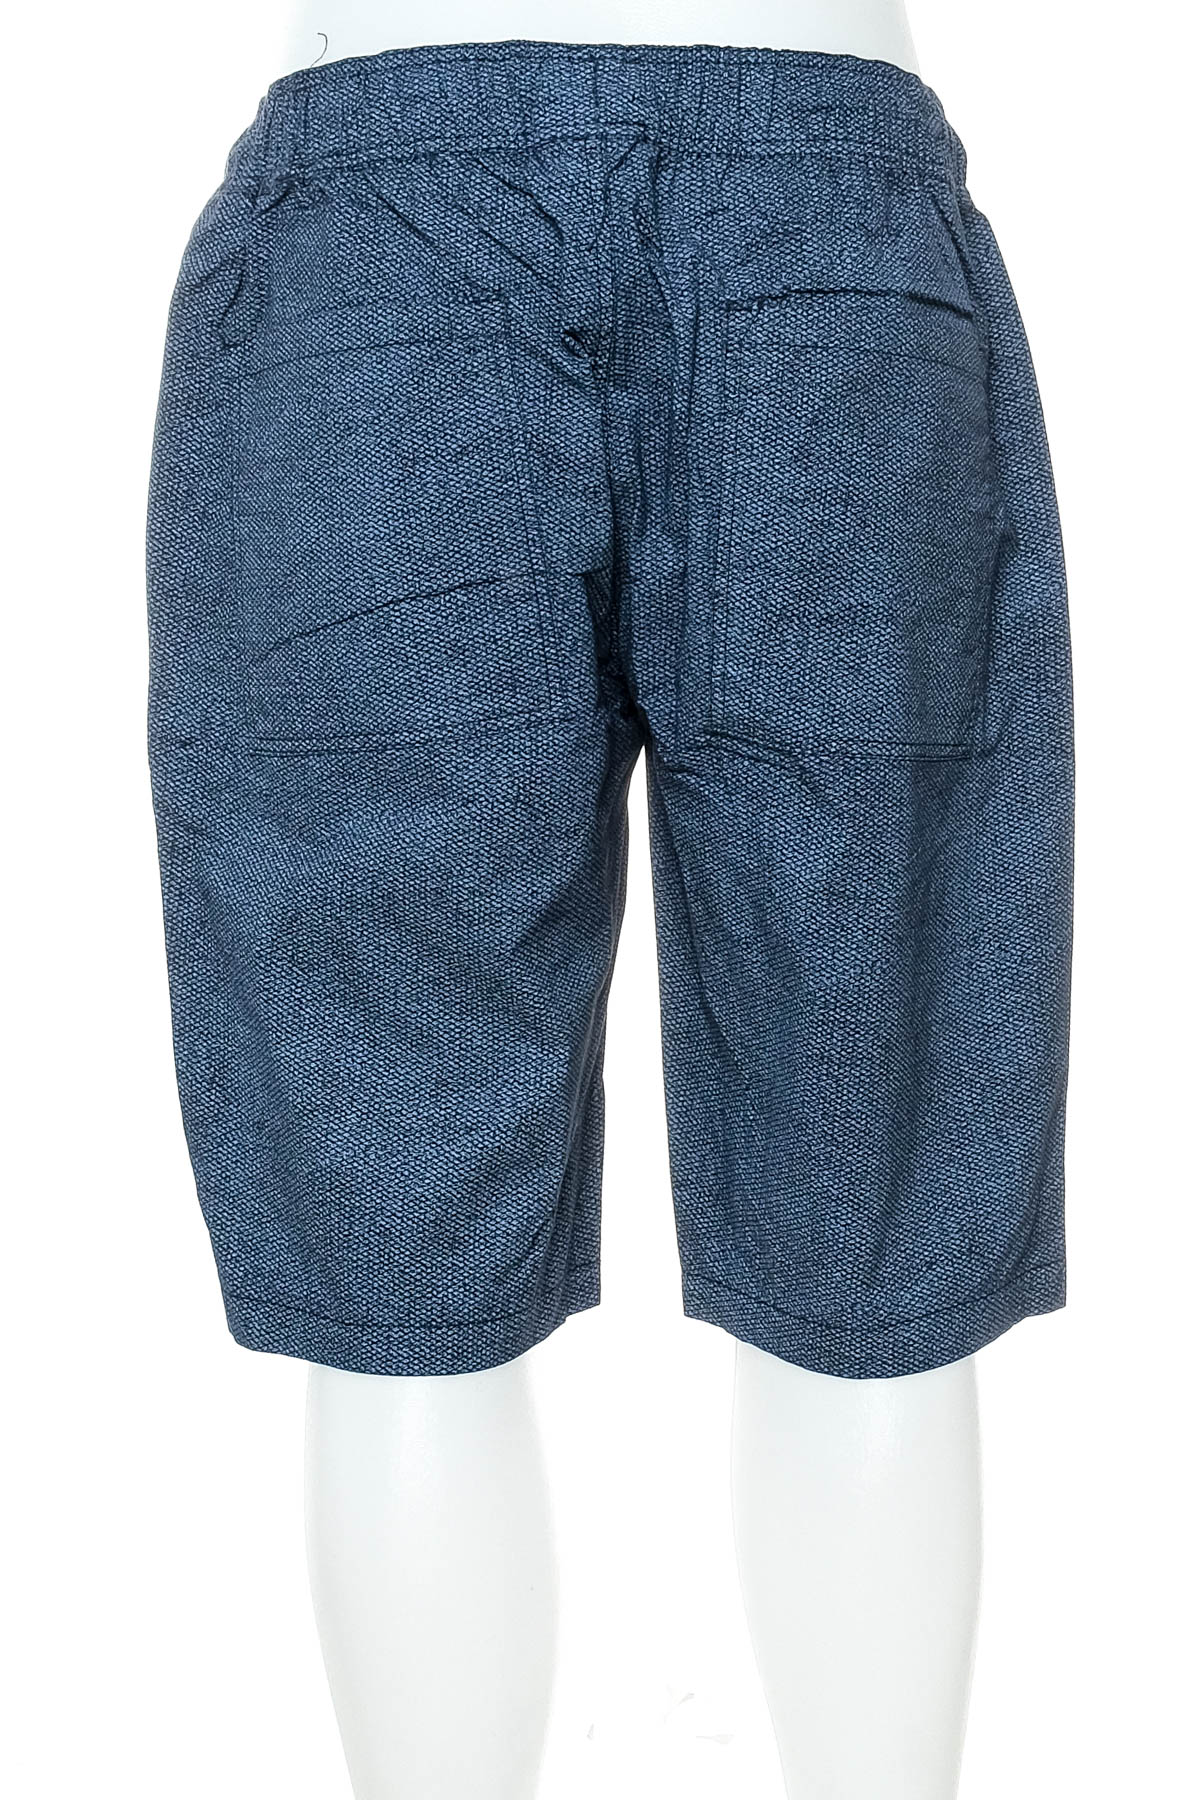 Men's shorts - Denim 1982 - 1